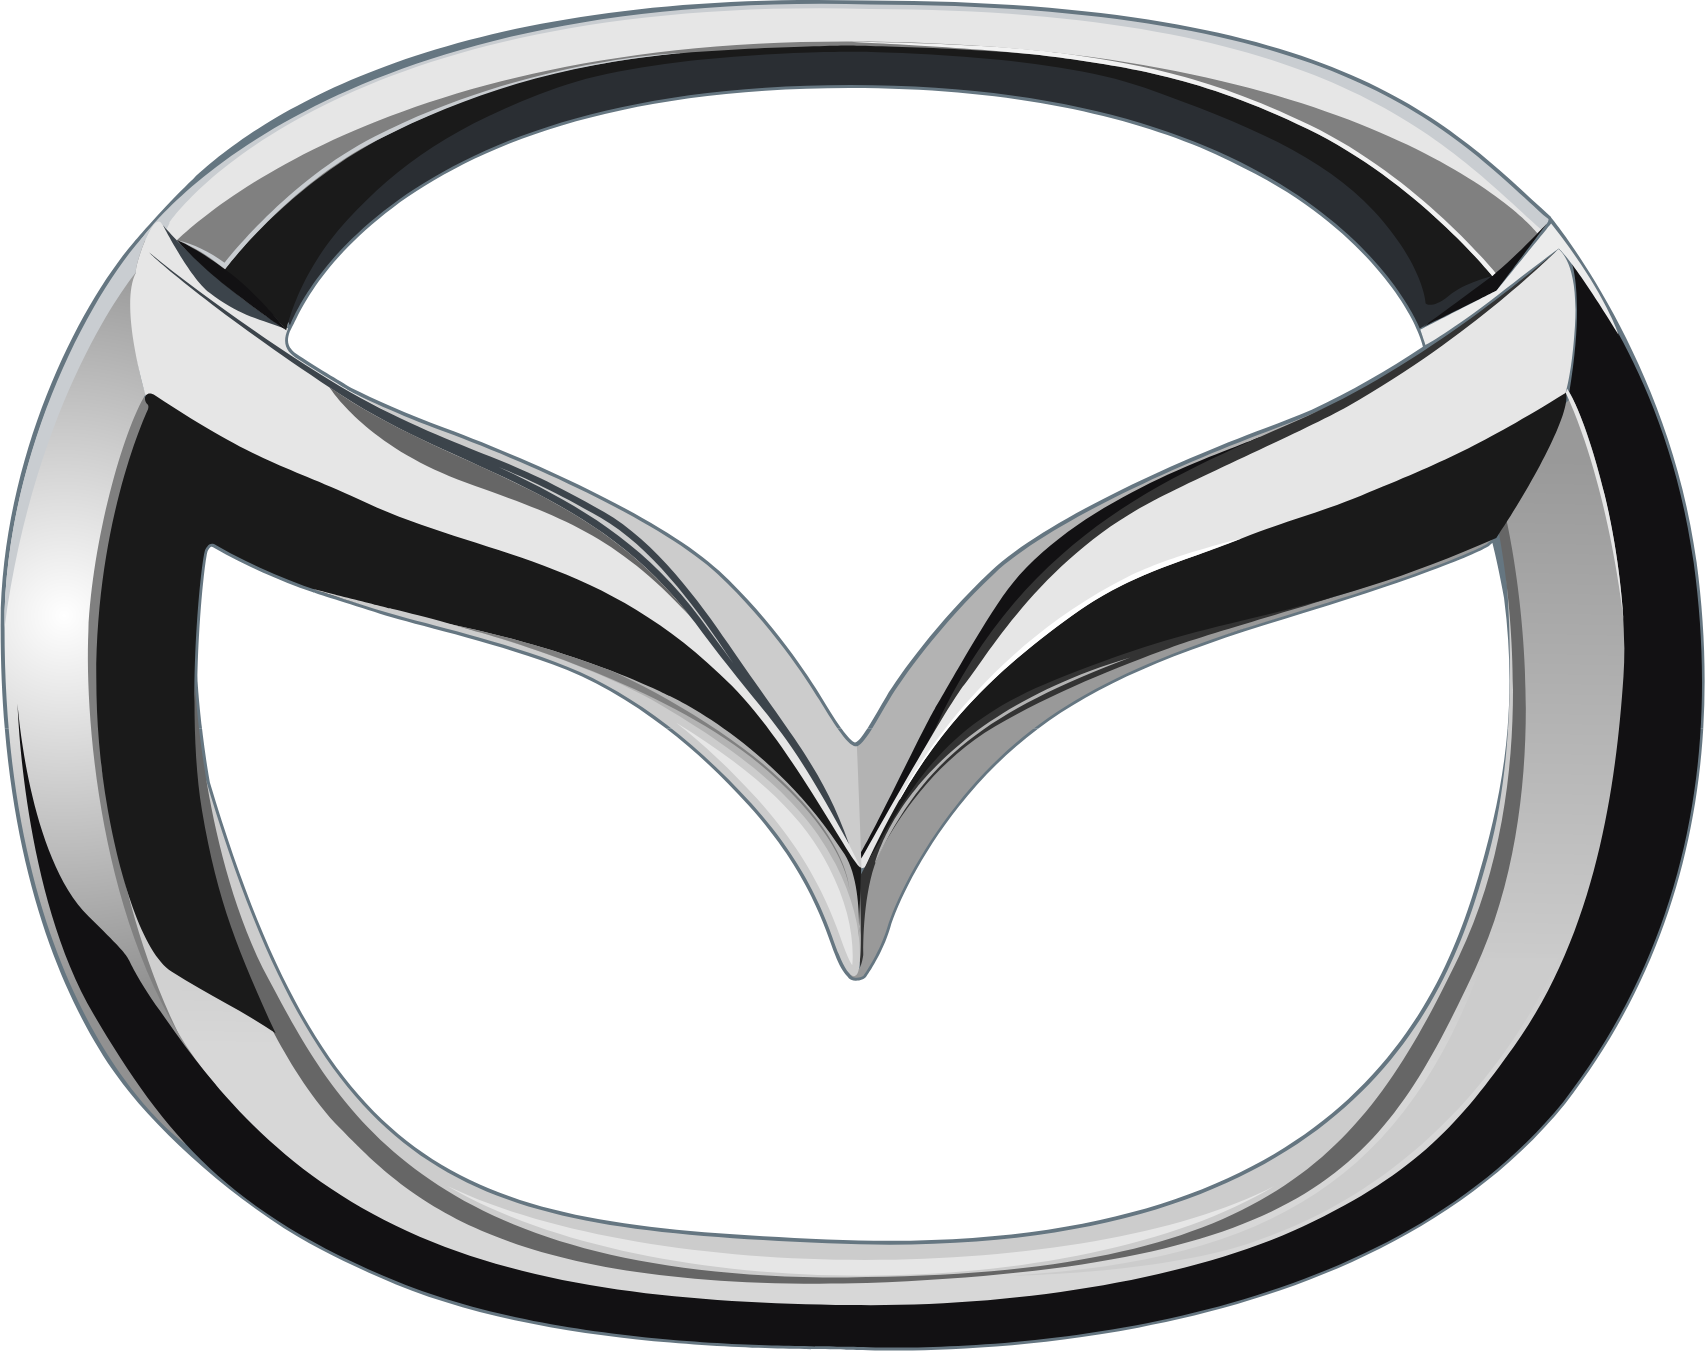 Mazda logo in transparent PNG format